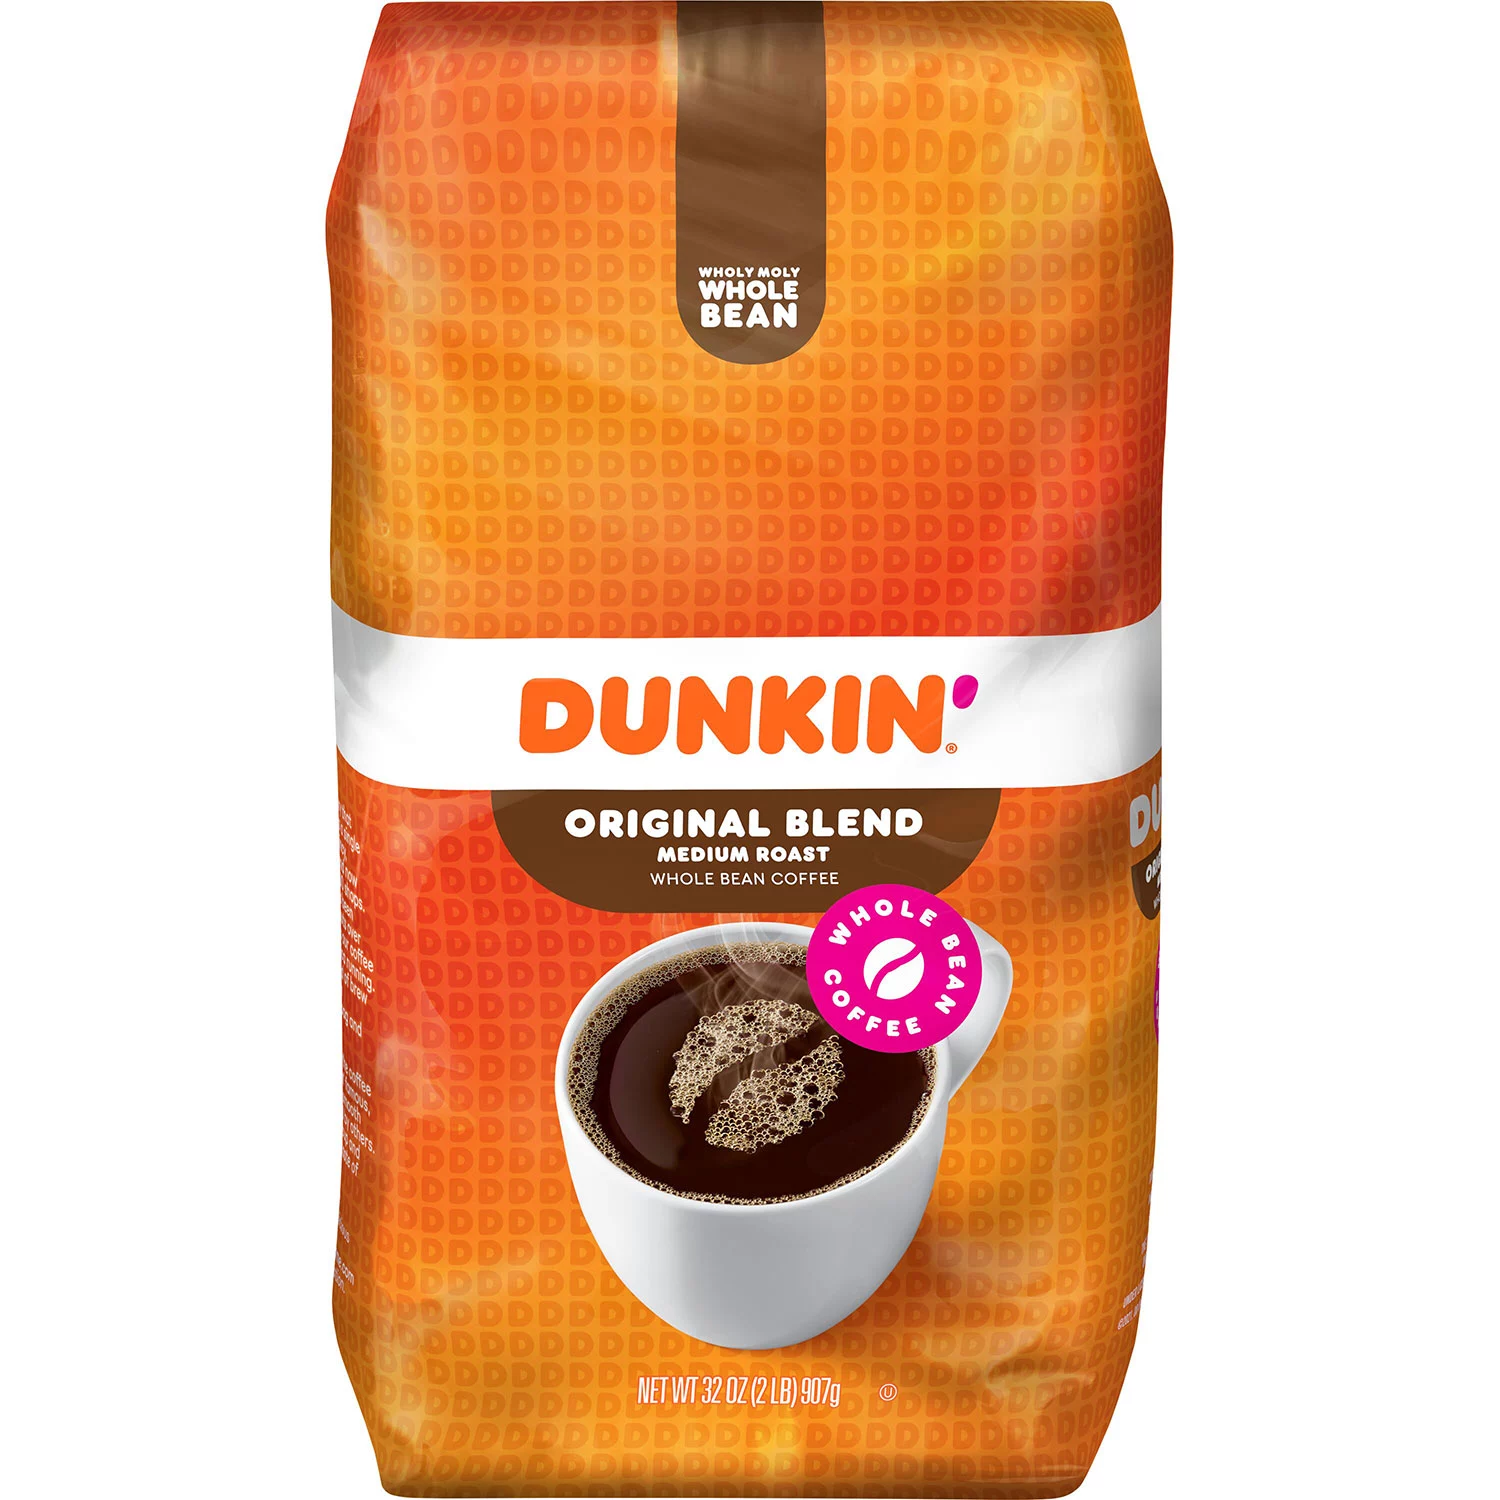 Dunkin’ Original Blend Whole Bean Coffee, Medium Roast (32 oz.)